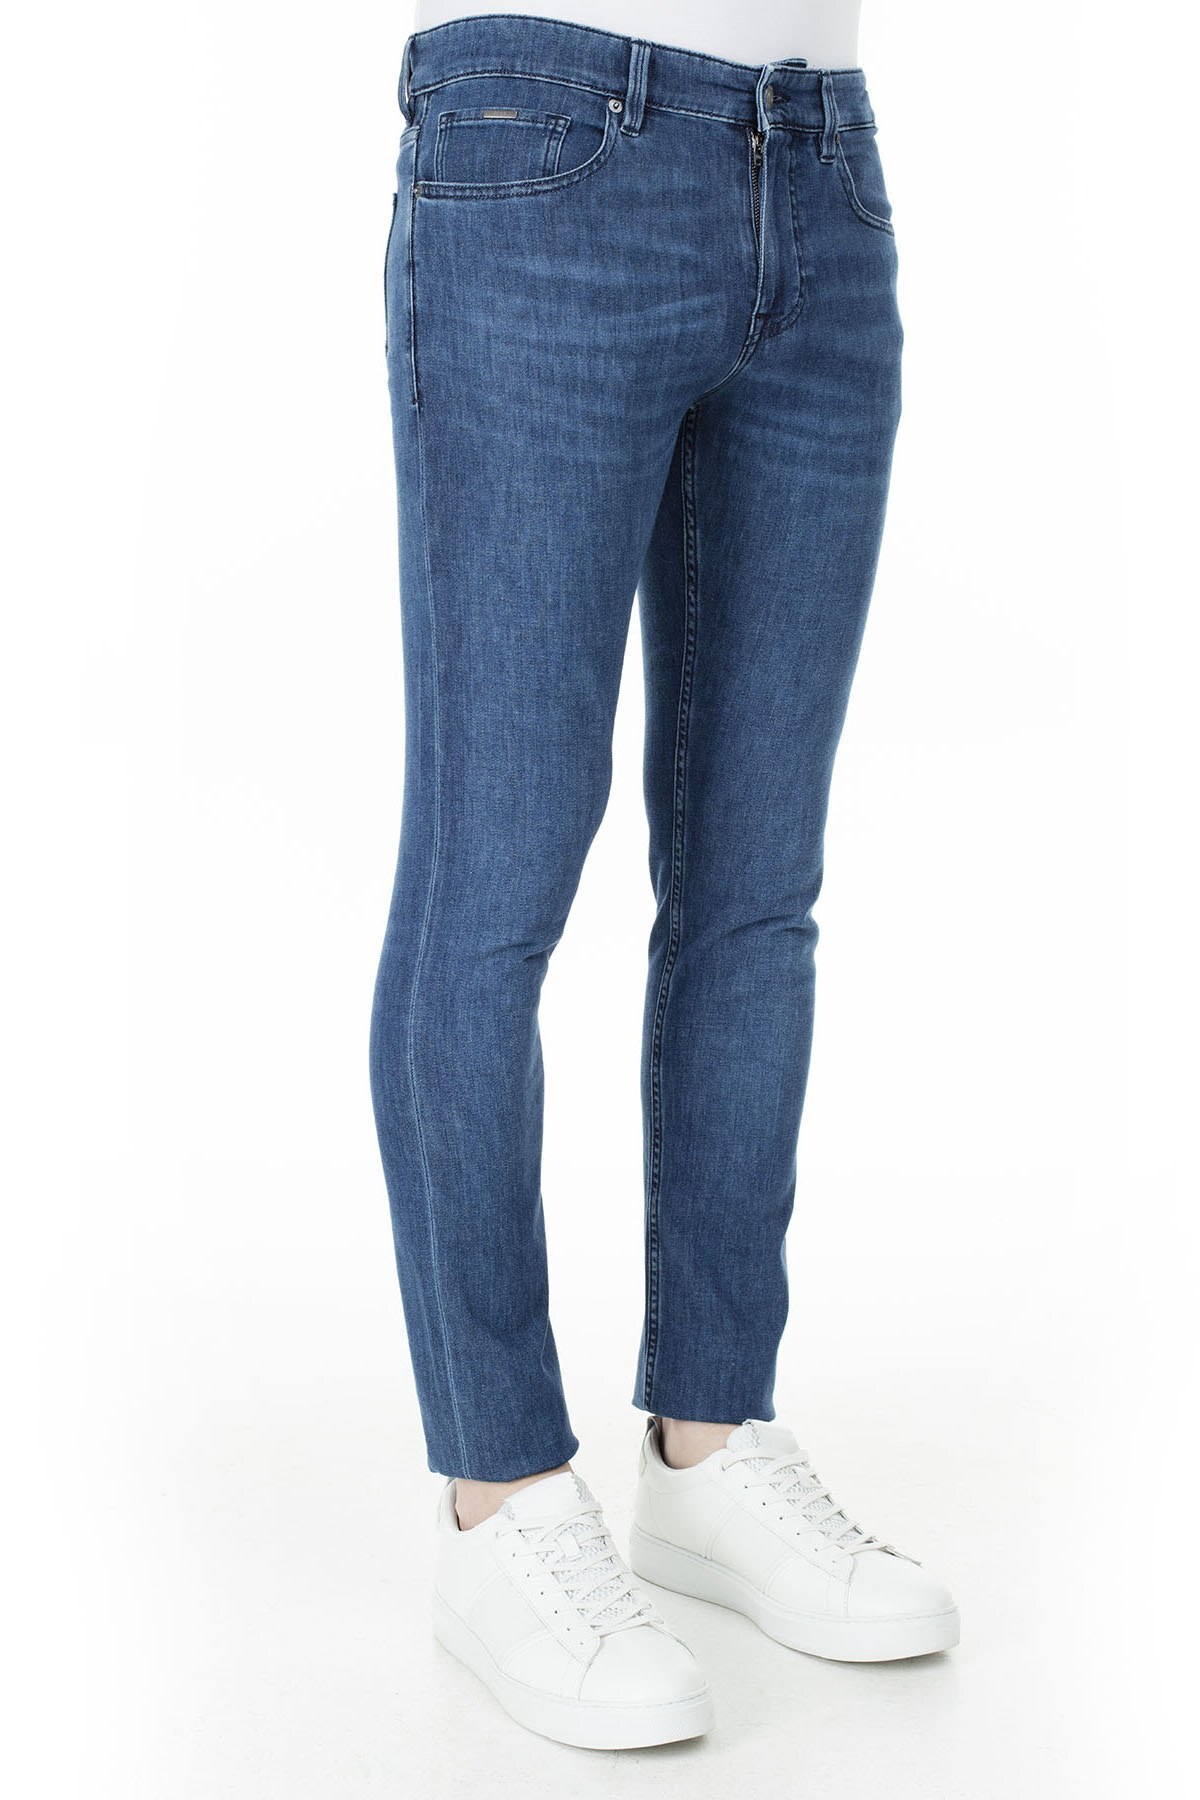 Hugo Boss Slim Fit Jeans Erkek Kot Pantolon 50426476 425 LACİVERT